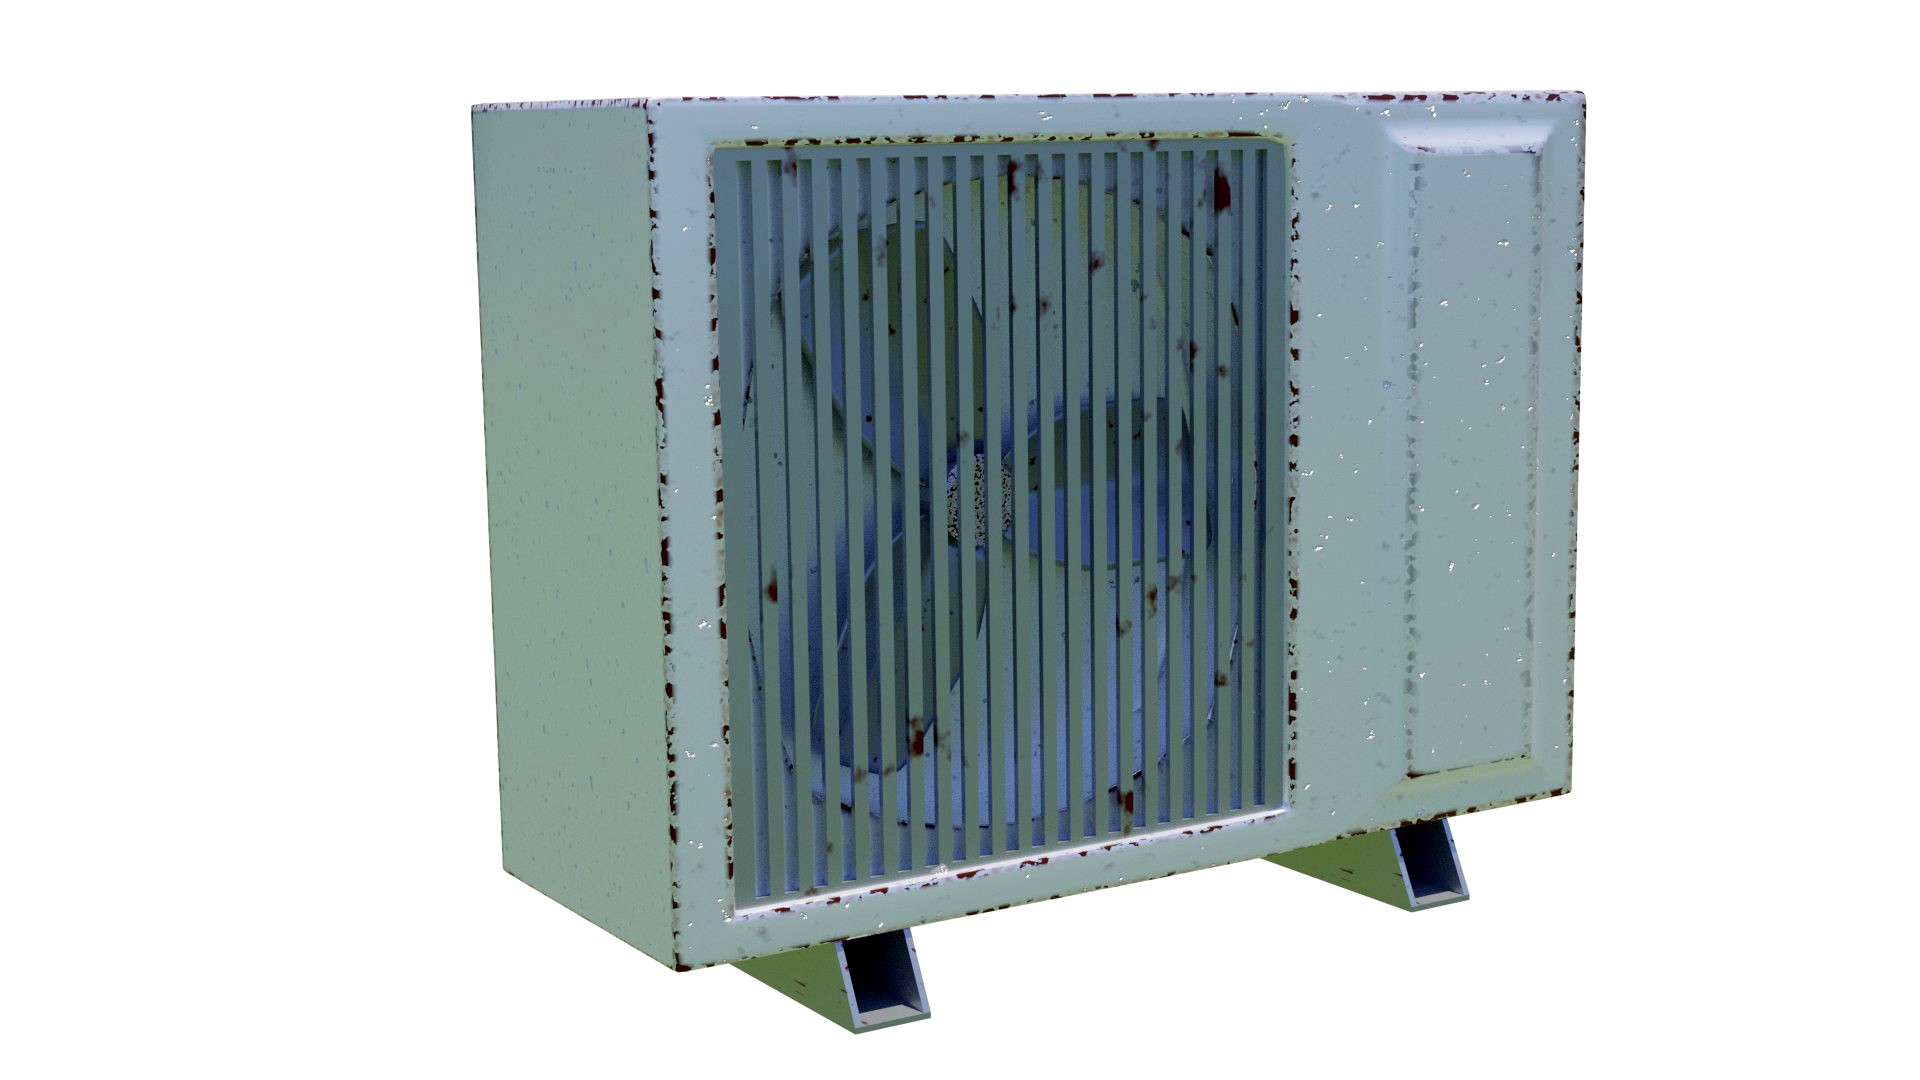 Animated Air-condition Compressor